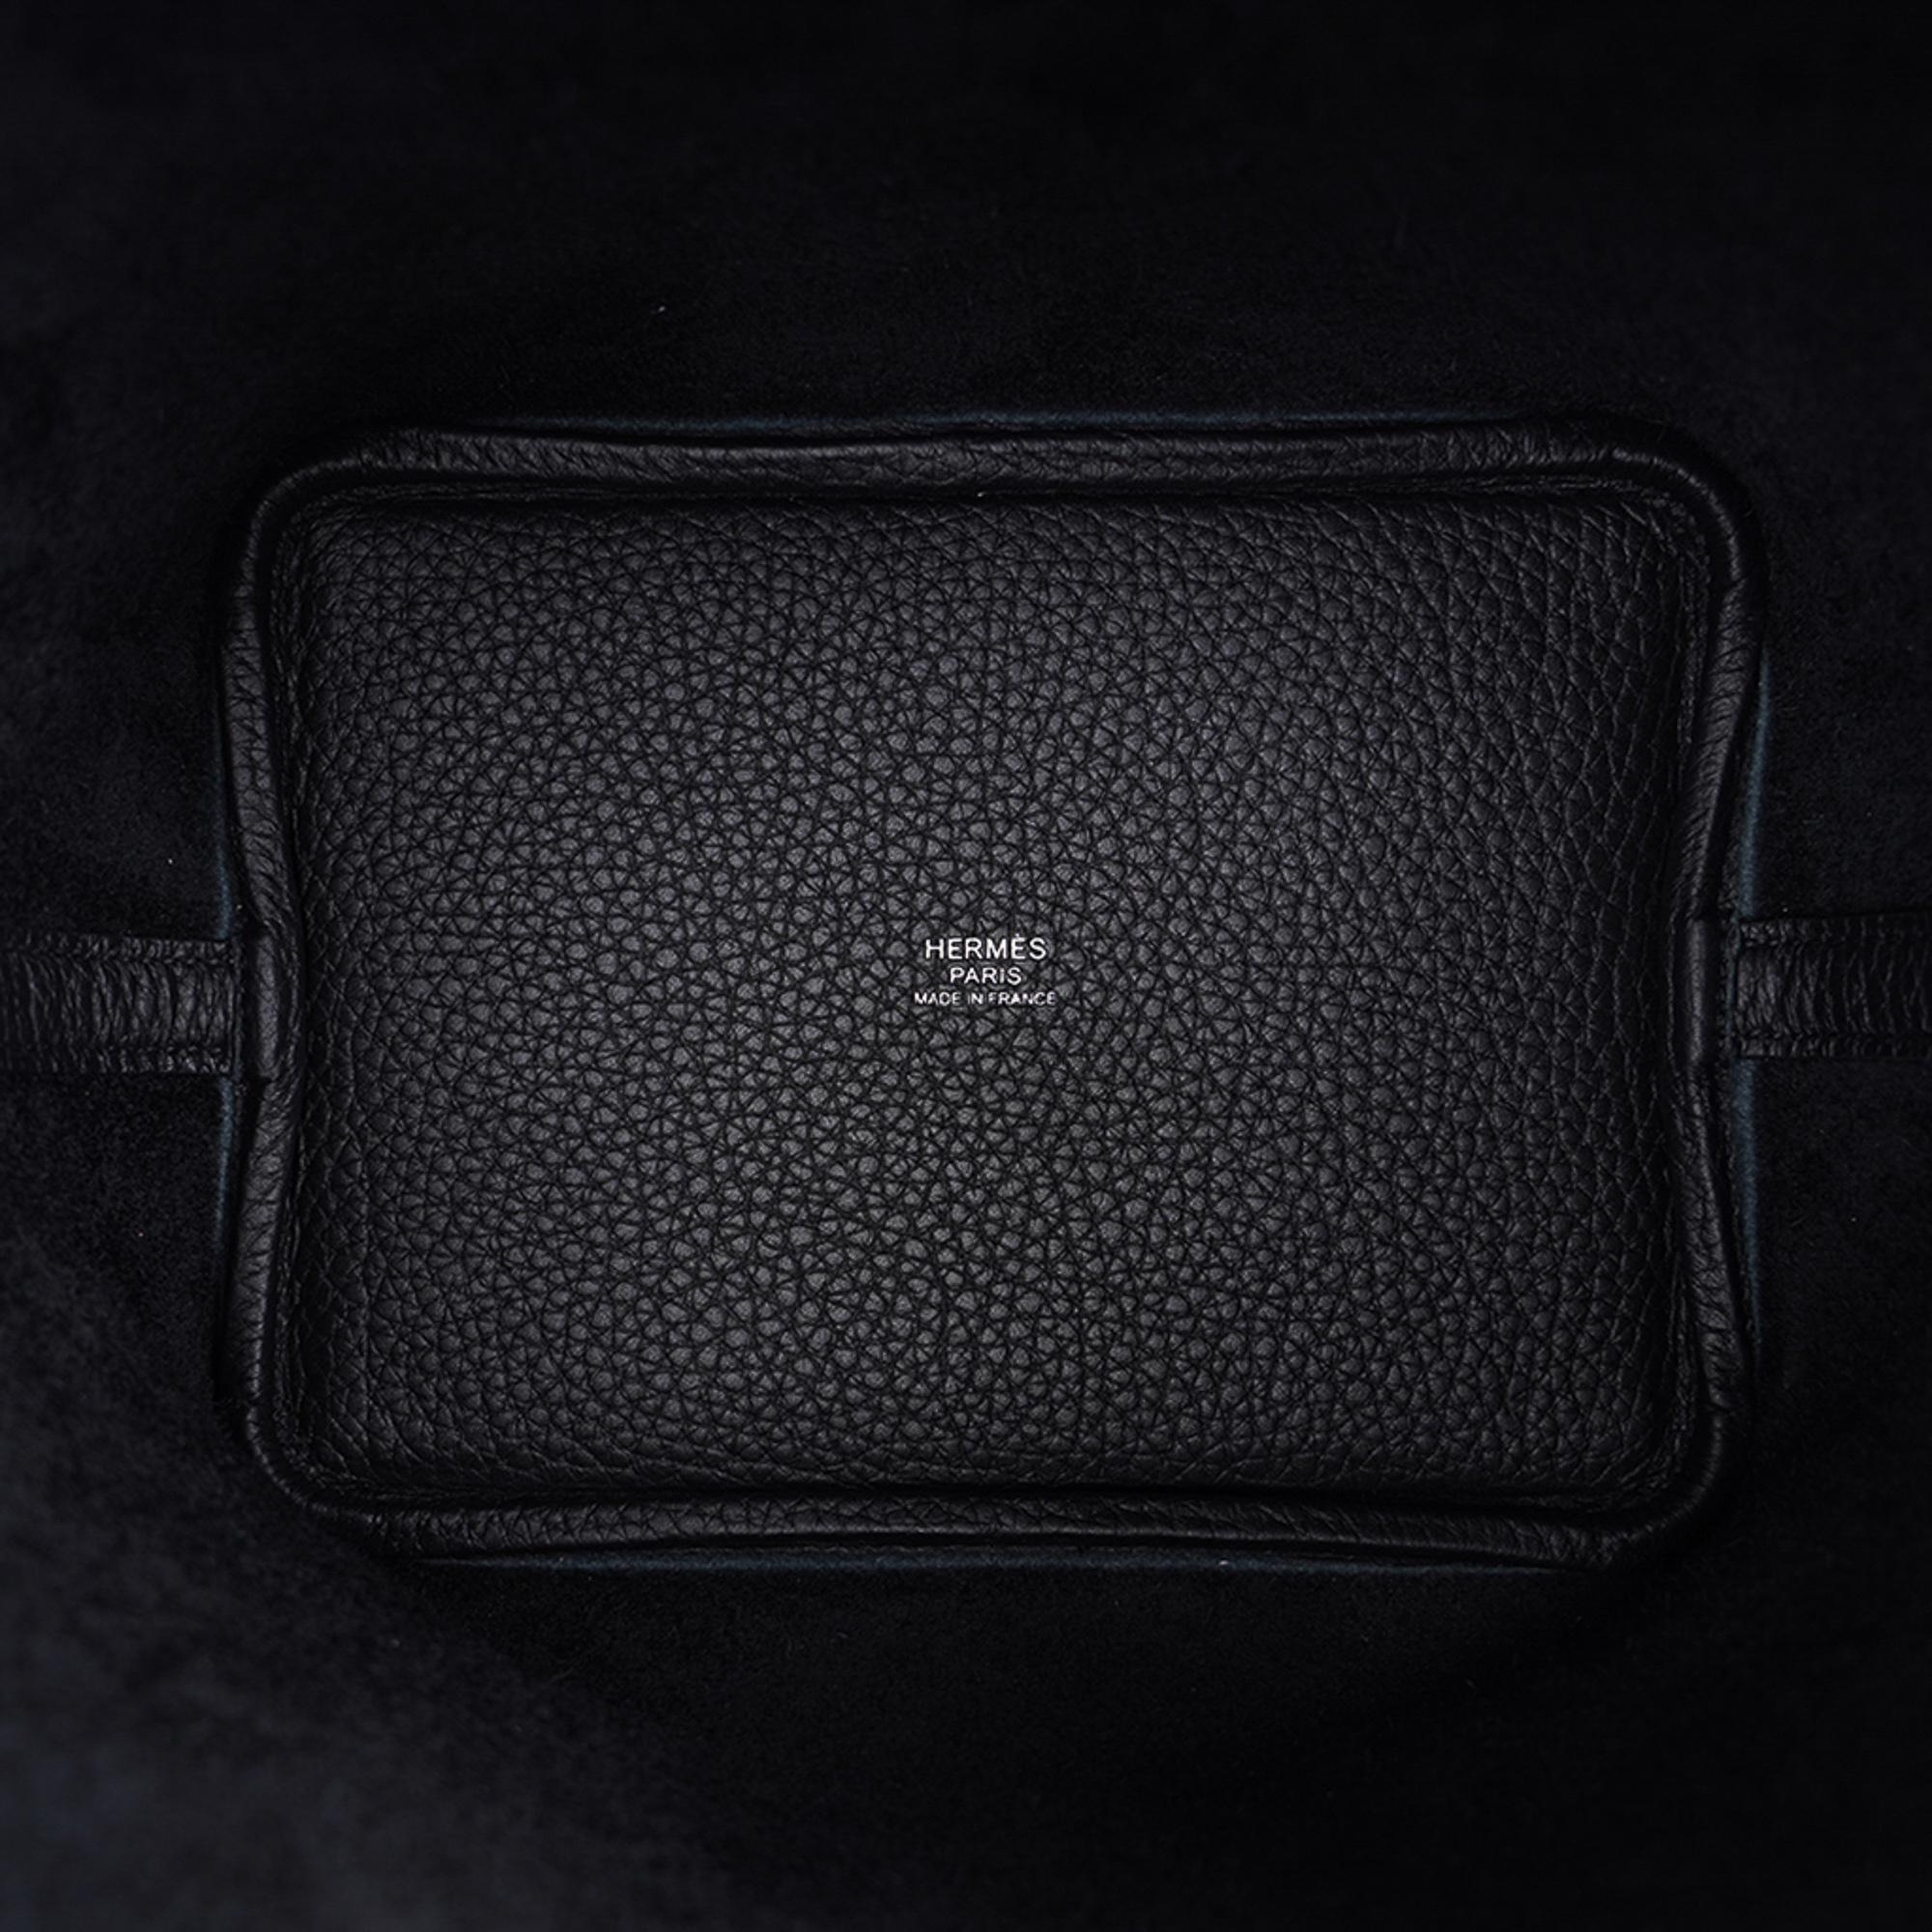 Hermes So Black Picotin Lock 18 Tote Bag Limited Edition 3